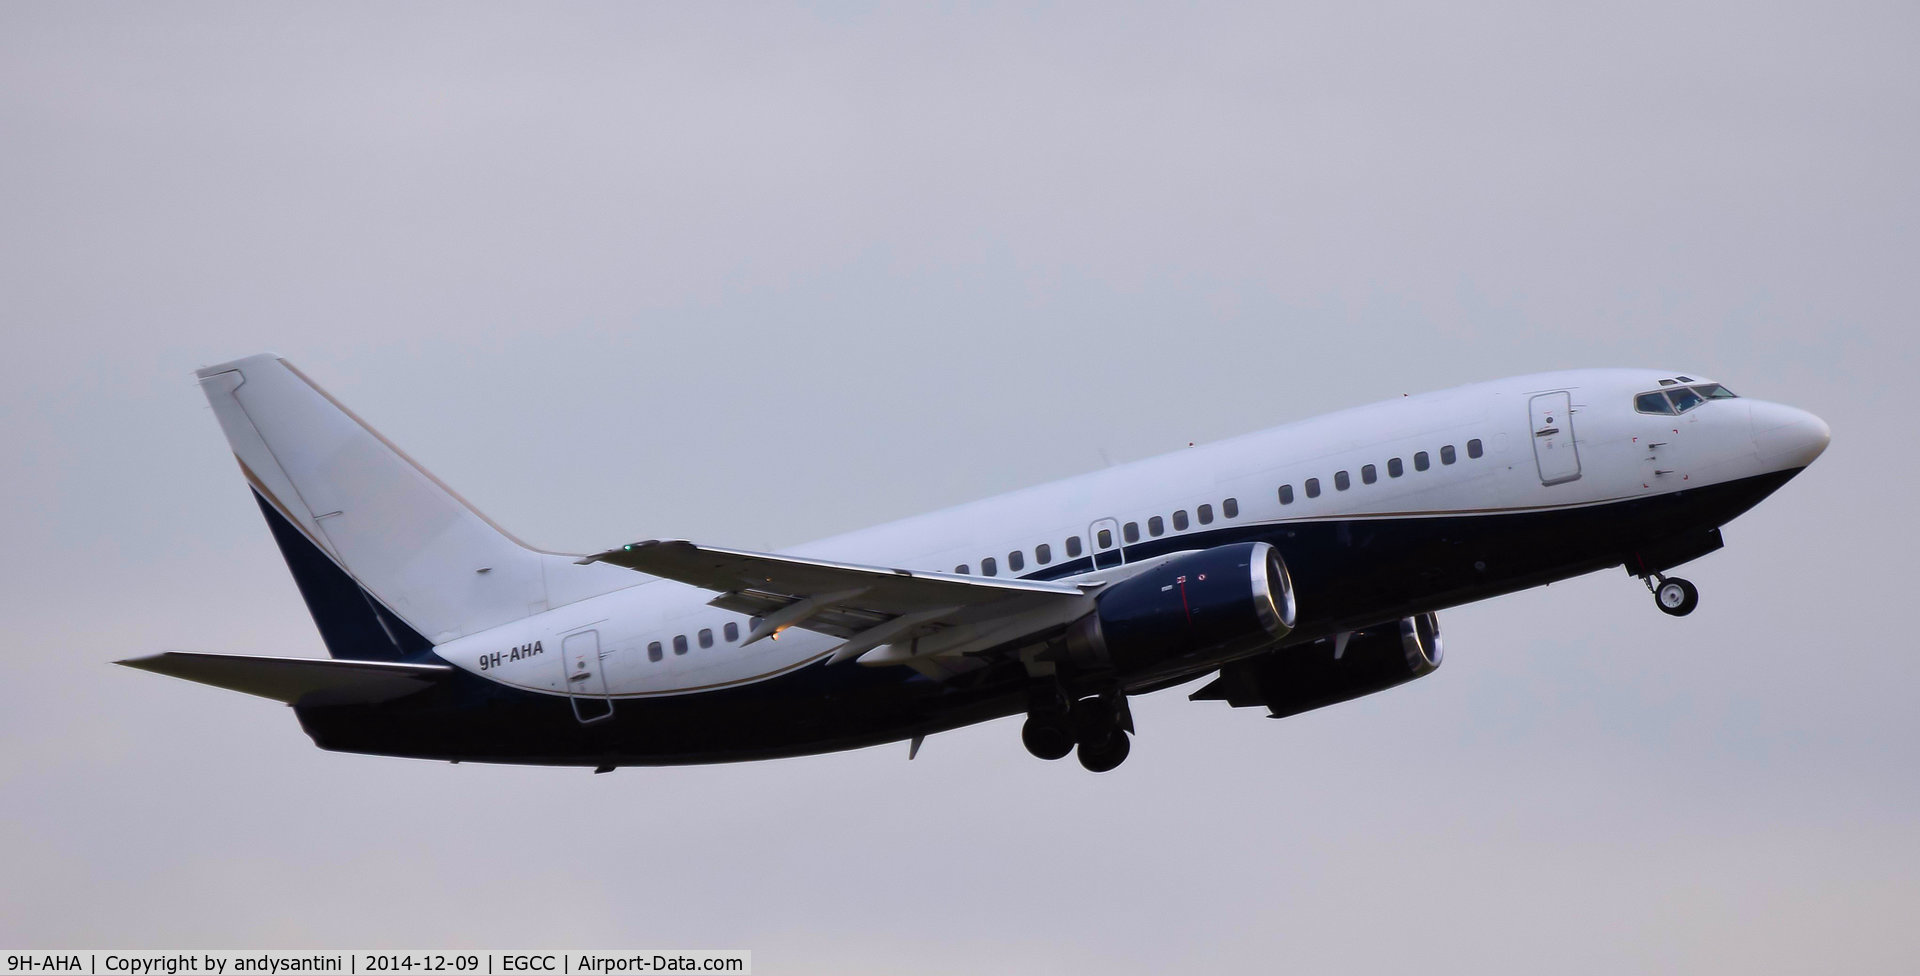 9H-AHA, 1991 Boeing 737-505 C/N 24647, took off from mane egcc uk